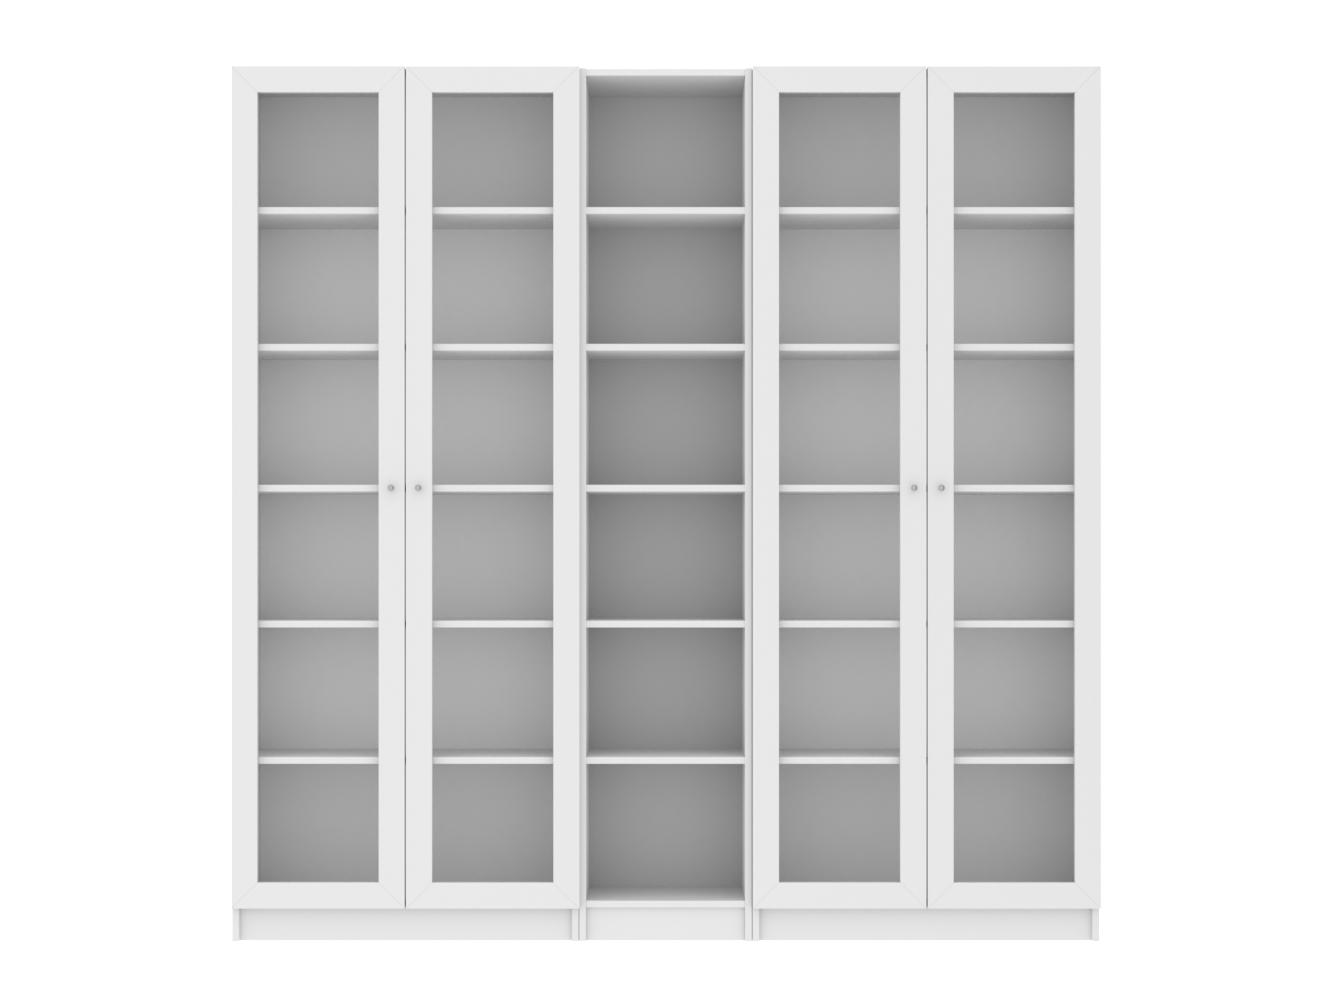 Книжный шкаф Билли 396 white ИКЕА (IKEA) изображение товара